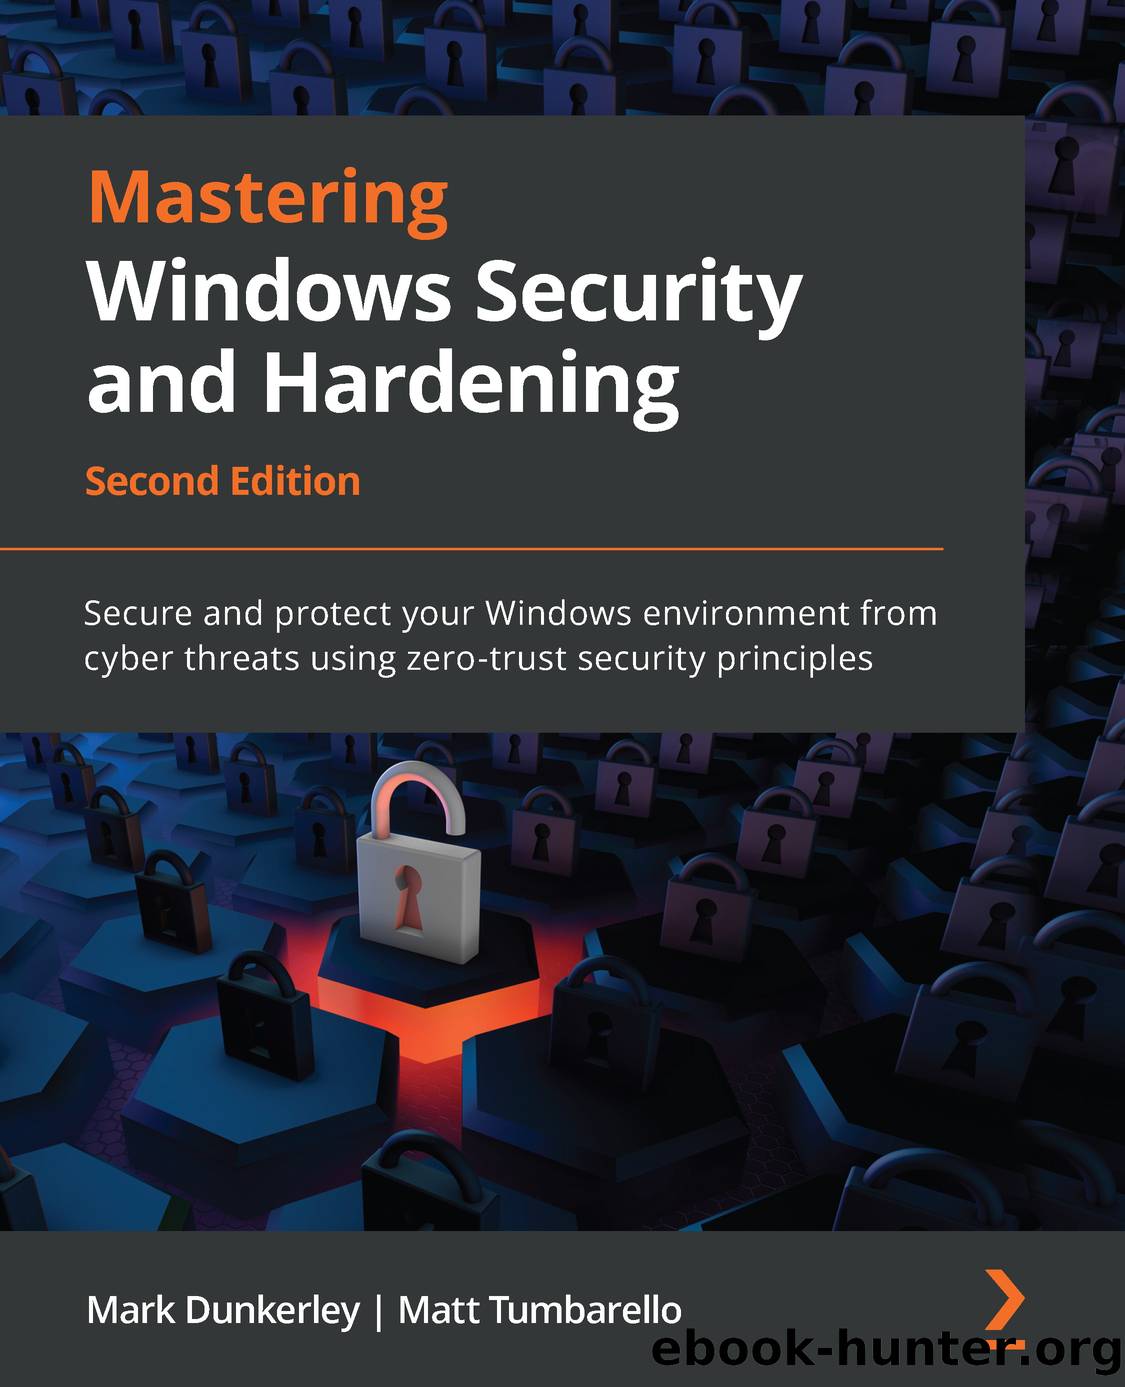 Mastering Windows Security and Hardening - Second Edition by Mark Dunkerley & Matt Tumbarello